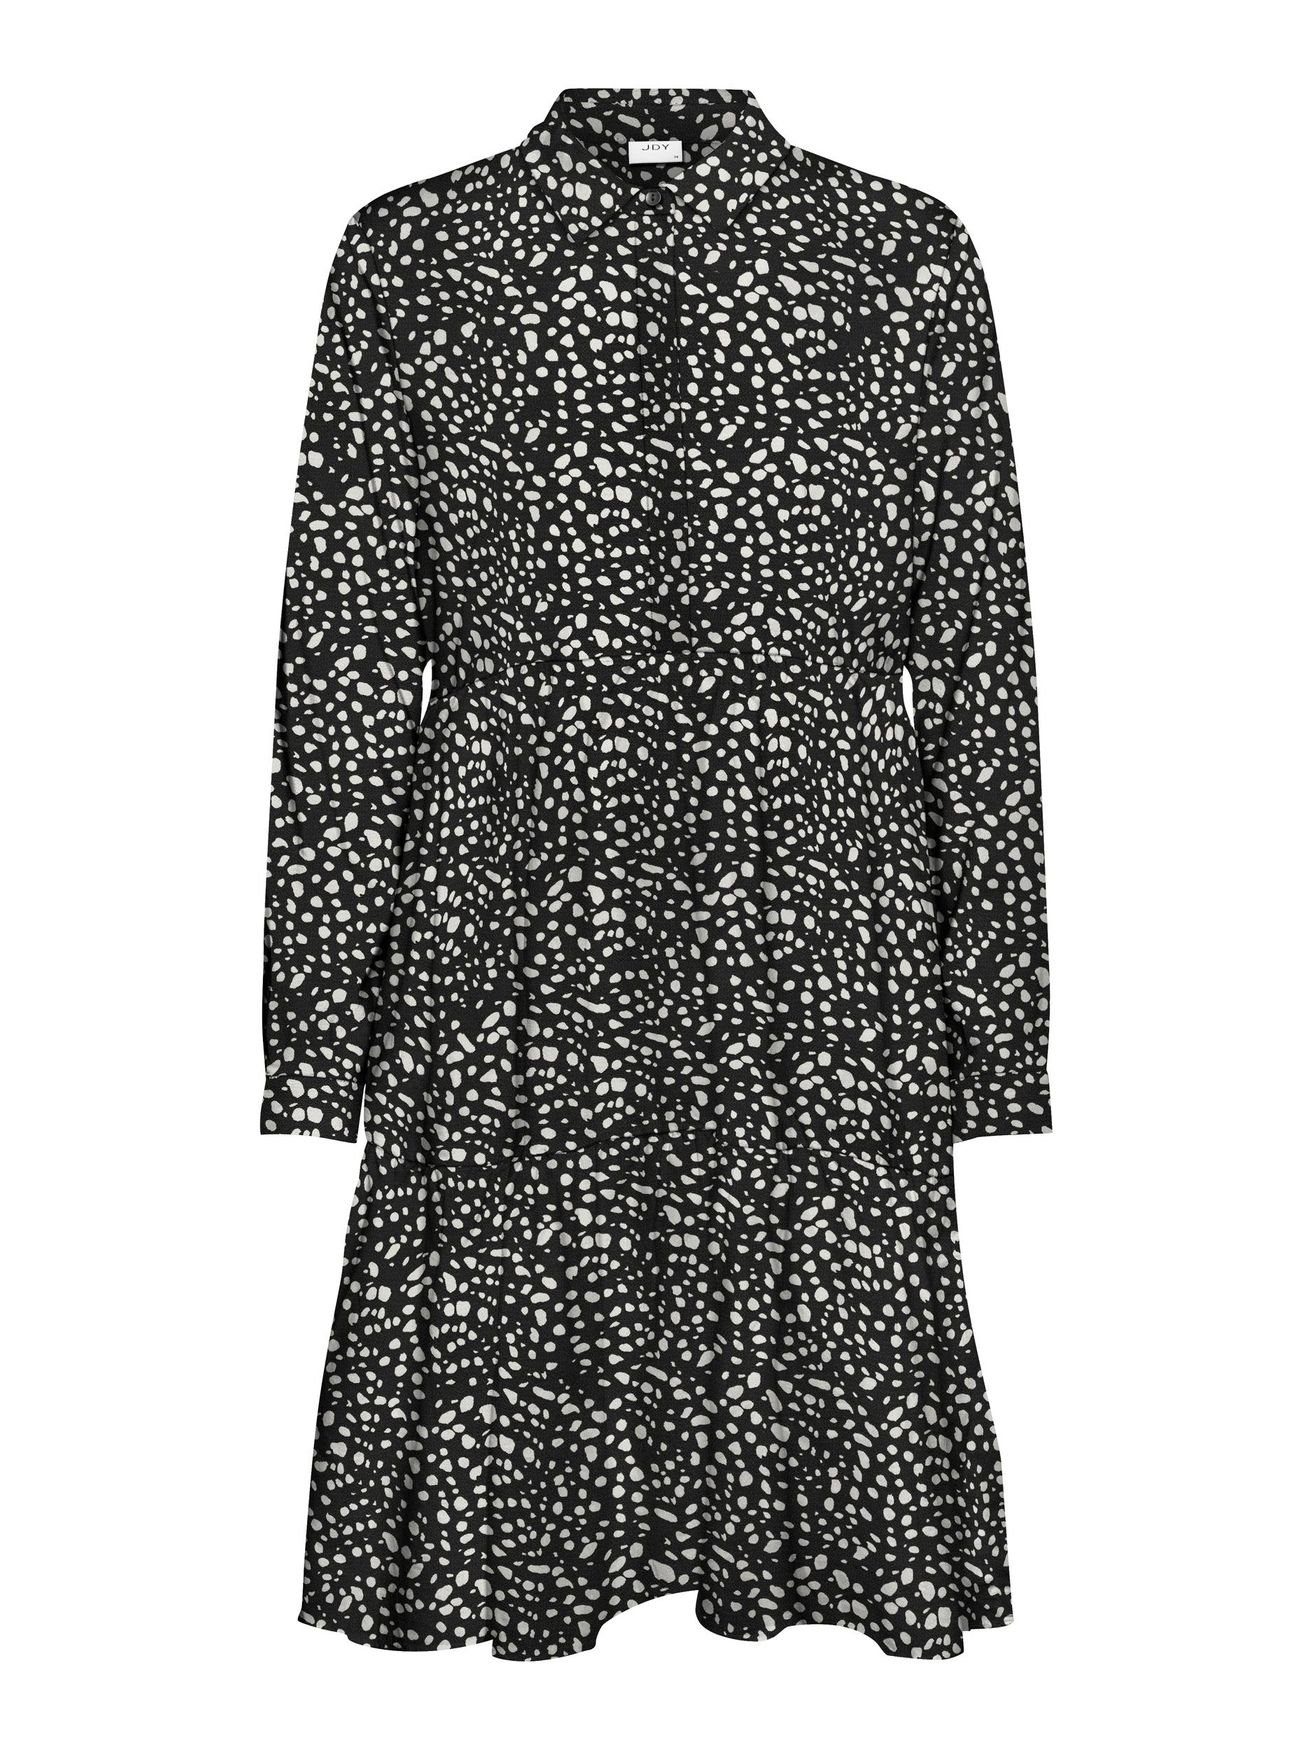 JACQUELINE de YONG Shirtkleid Kurzes JDYPIPER Langarm Schwarz-6 (lang) 4536 in Tunika Kleid Bluse Gemusterte